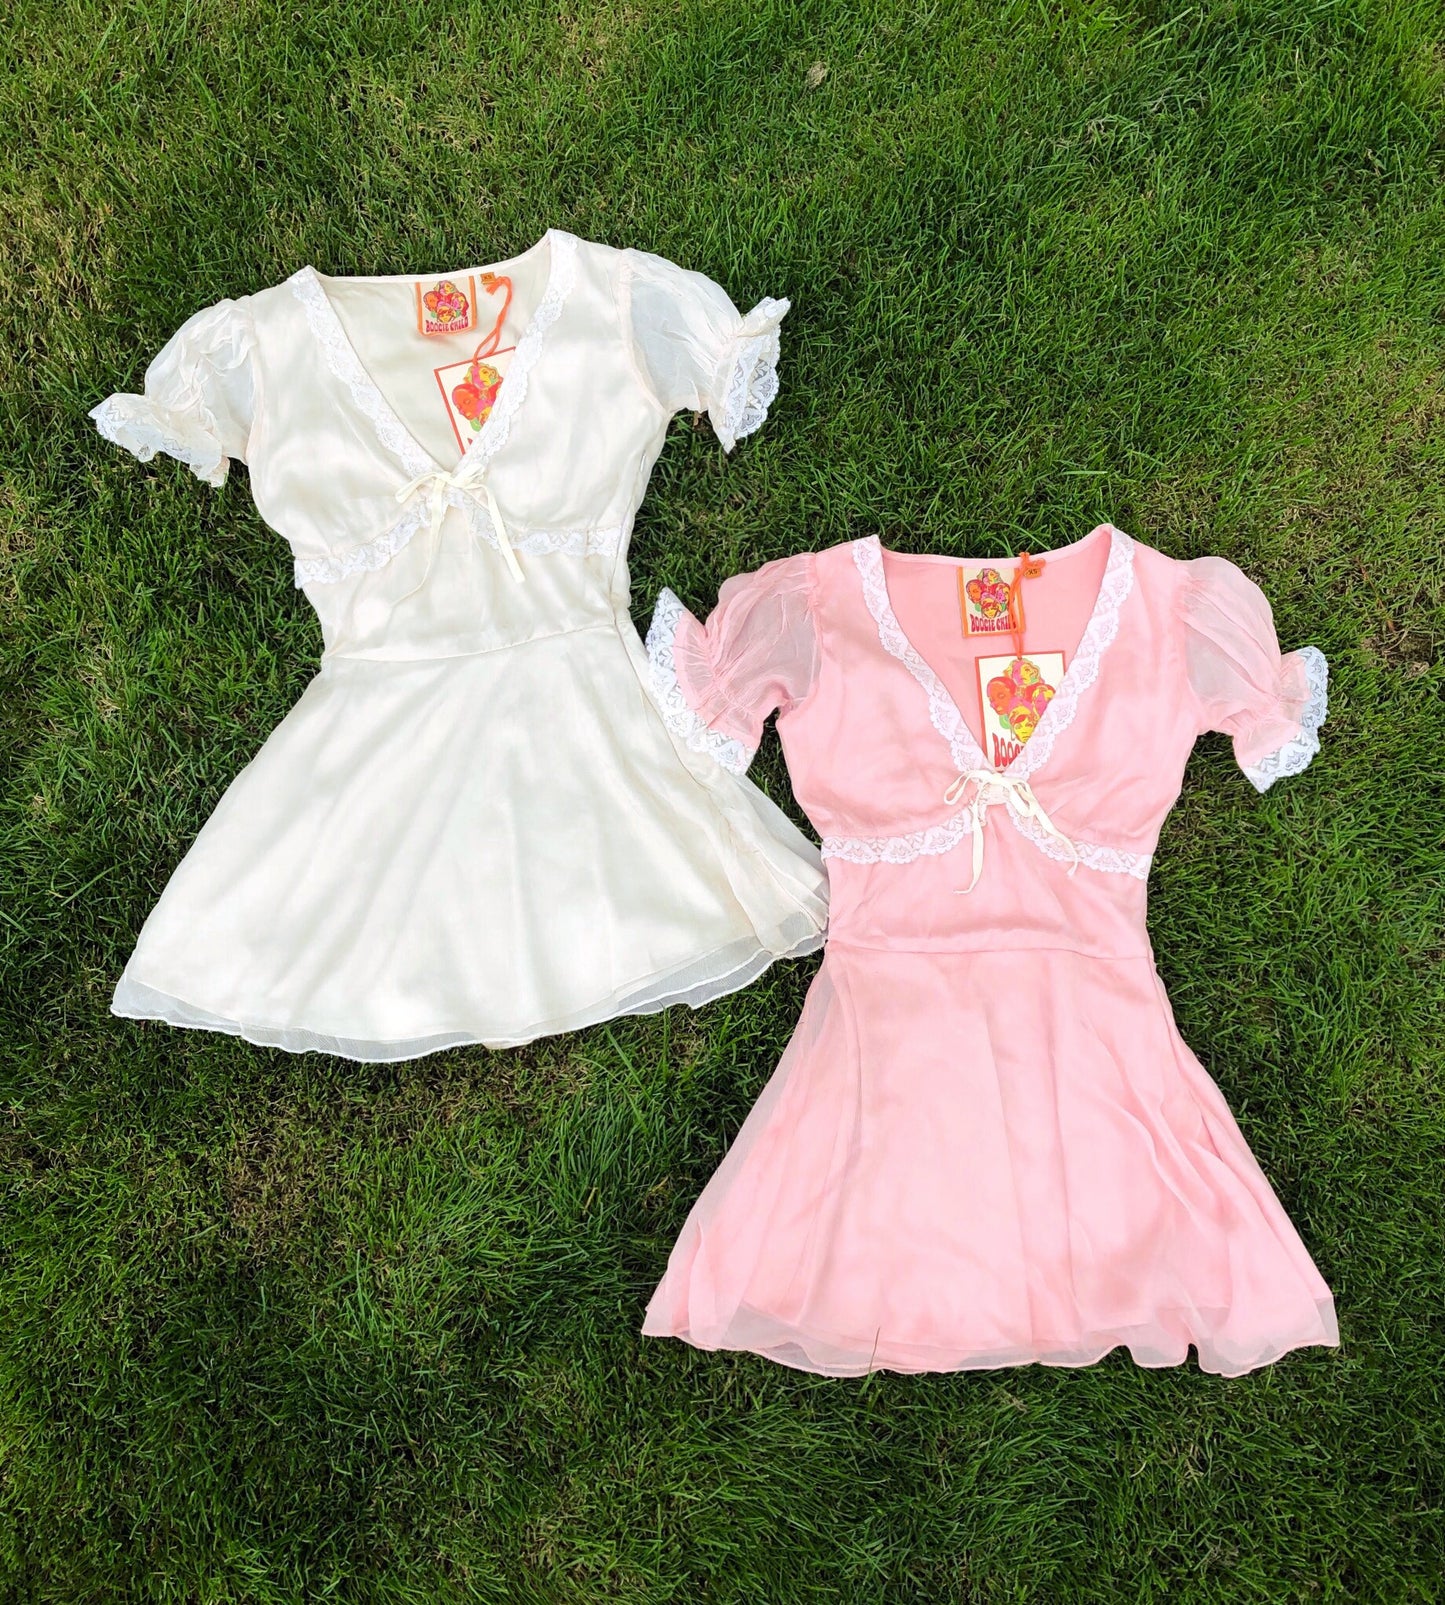 The Belle Babydoll Mini Dress